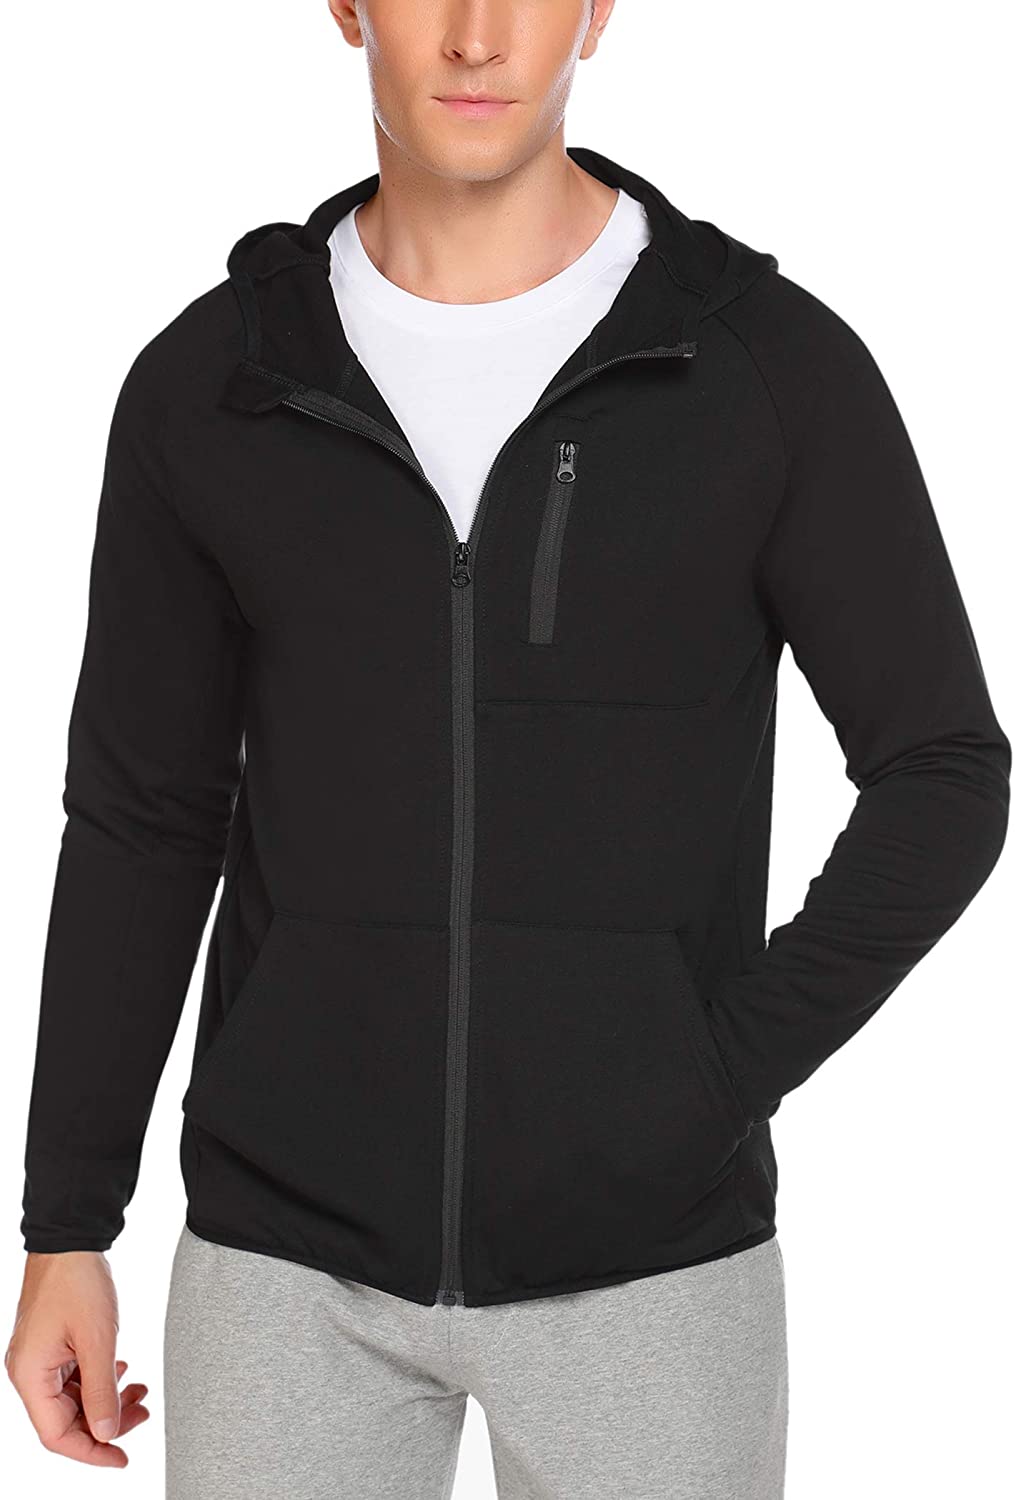 COOFANDY Mens Athletic Long Sleeve Sweatshirt with Zipped Pocket